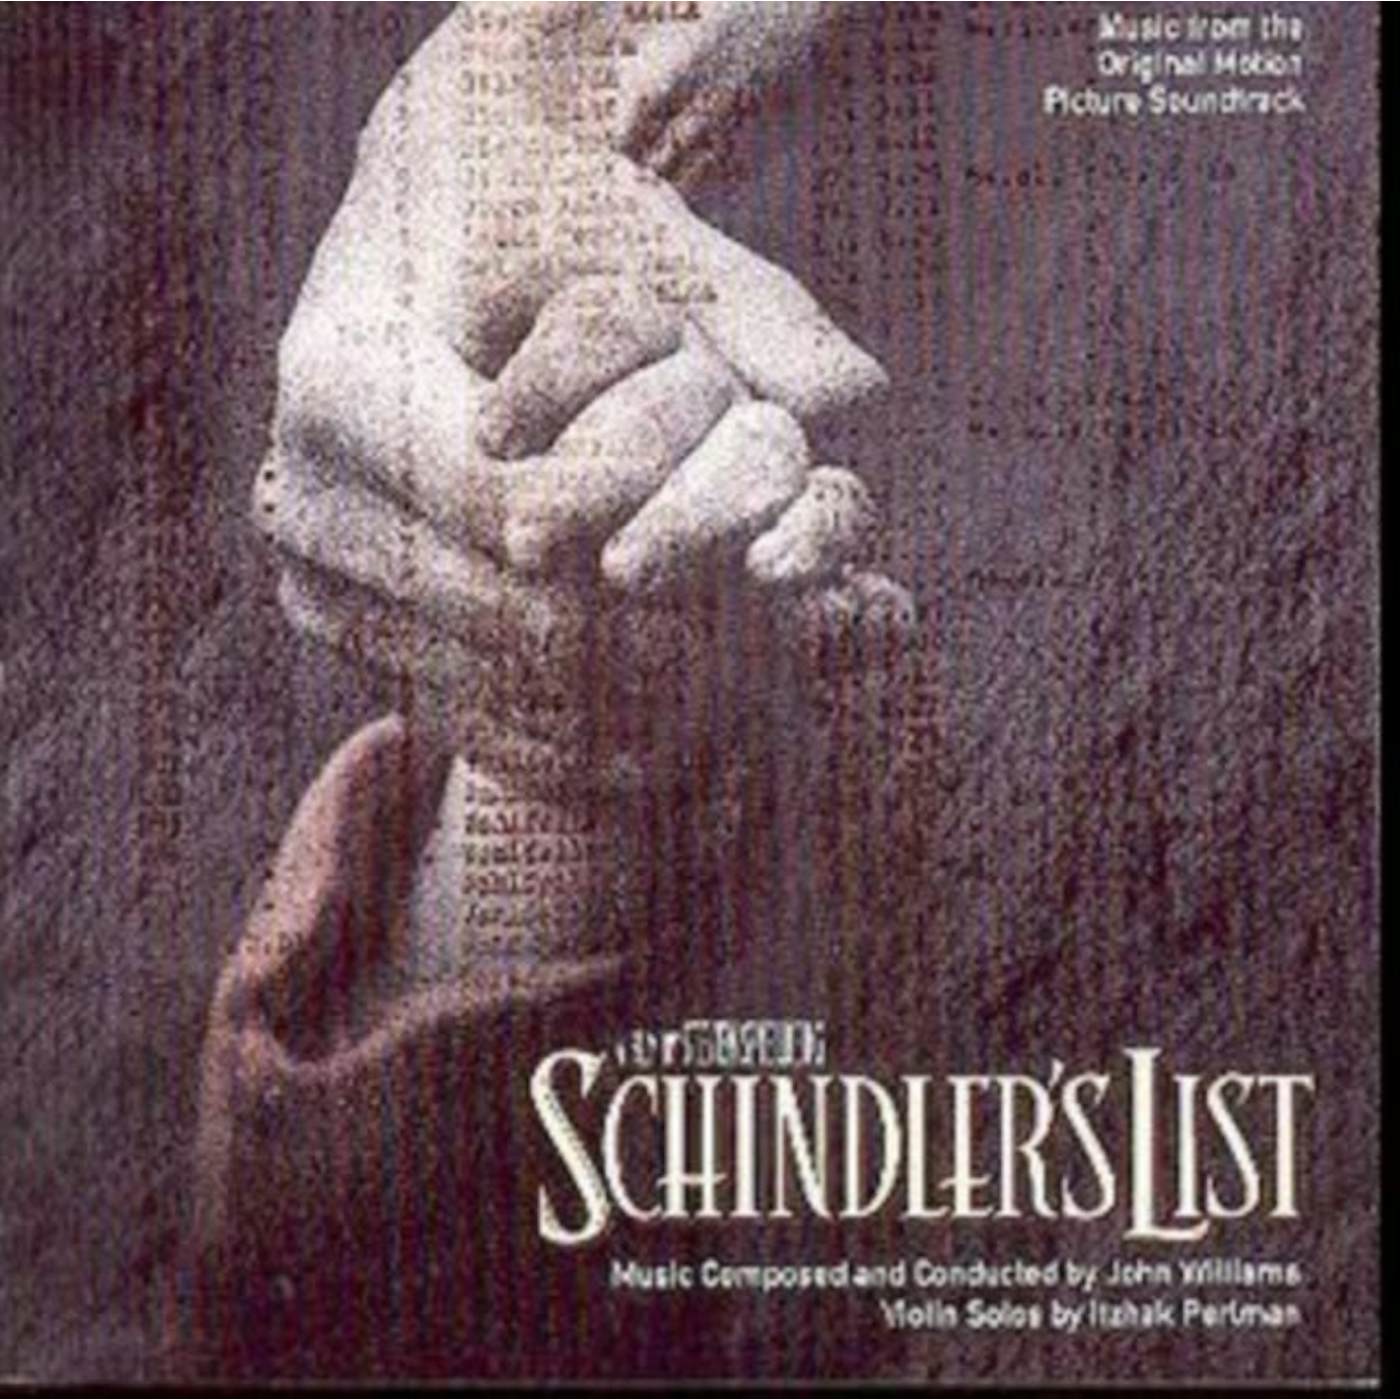 John Williams CD - Schindler's List - Original Soundtrack